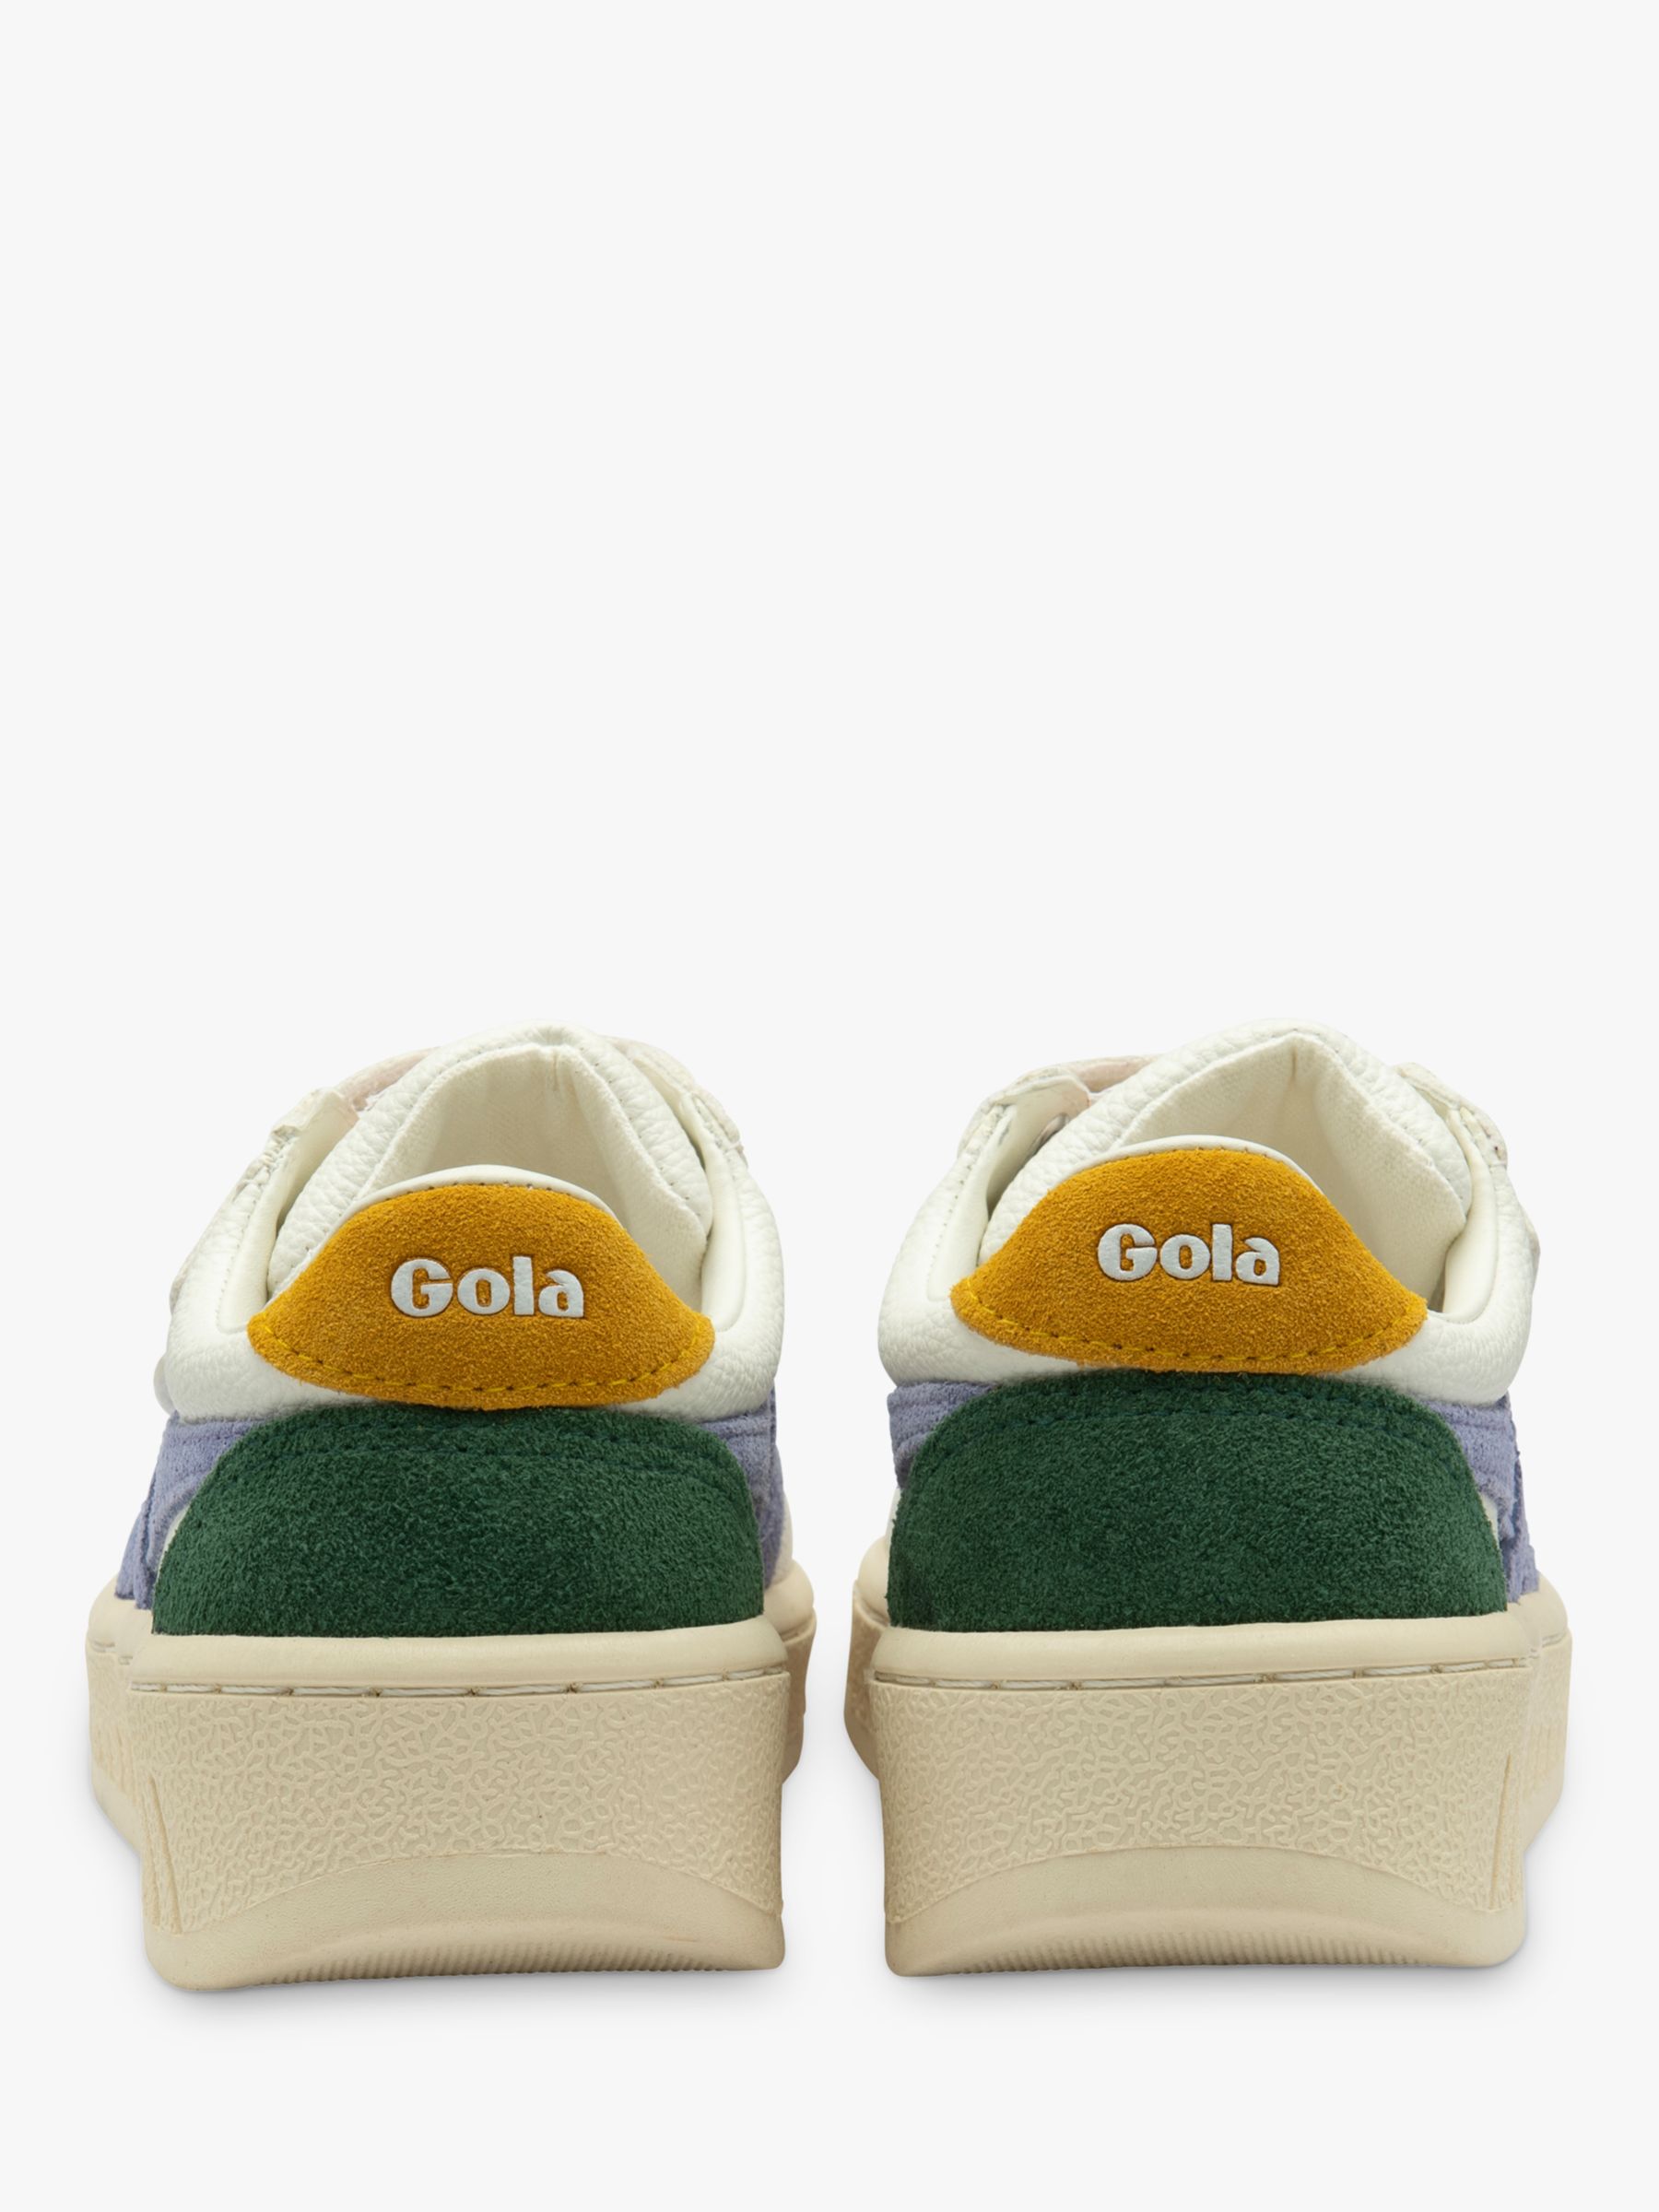 Gola Kids' Grand Slam Trident Riptape Shoes, White/Lavender/Sun, 1